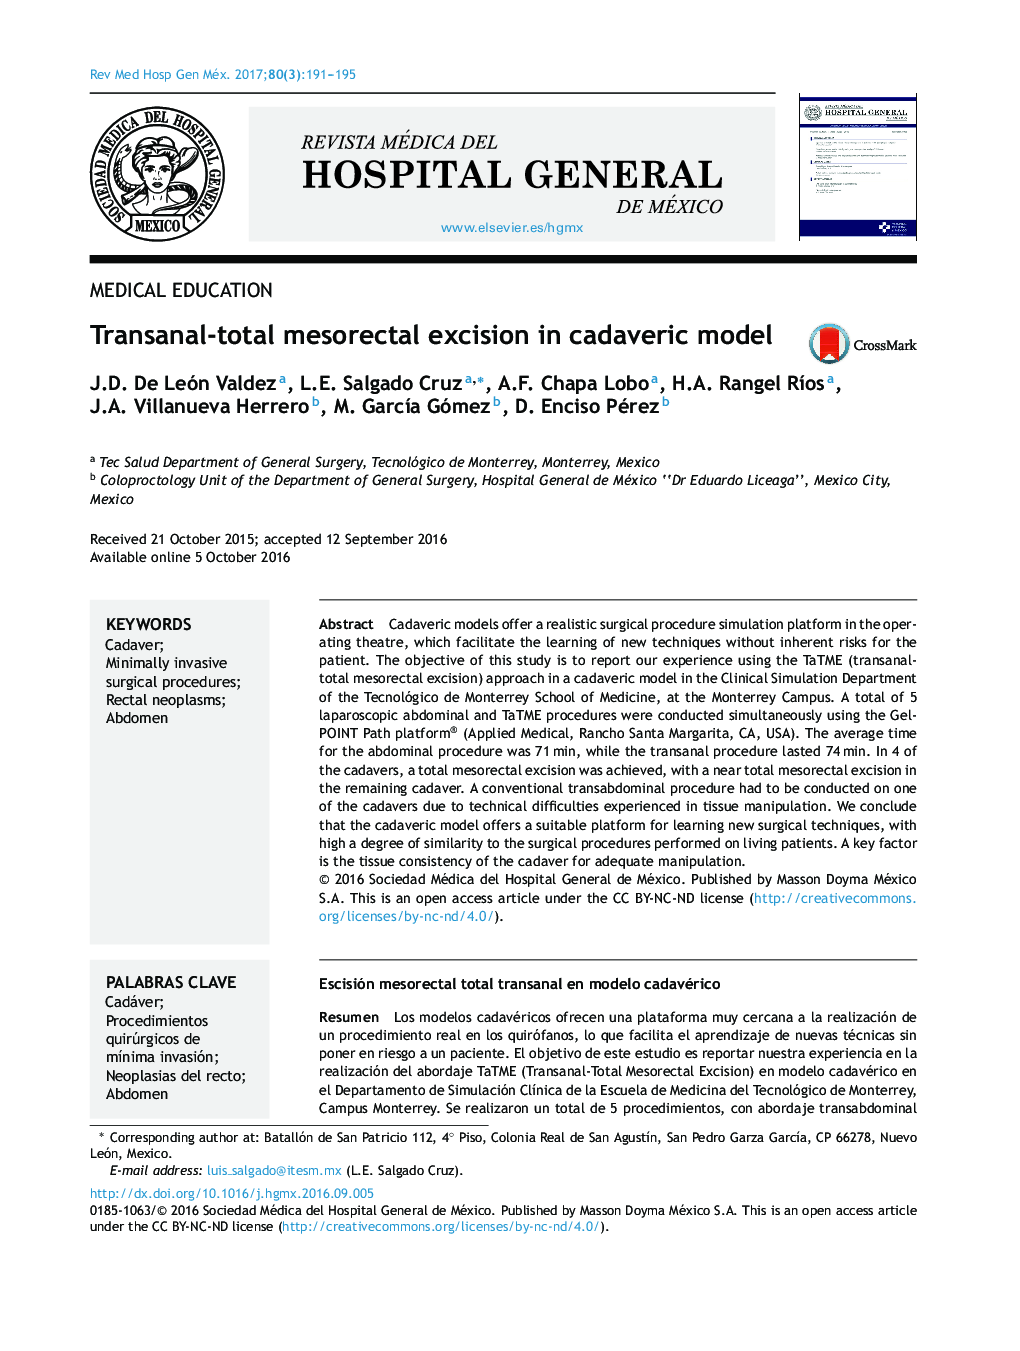 Transanal-total mesorectal excision in cadaveric model